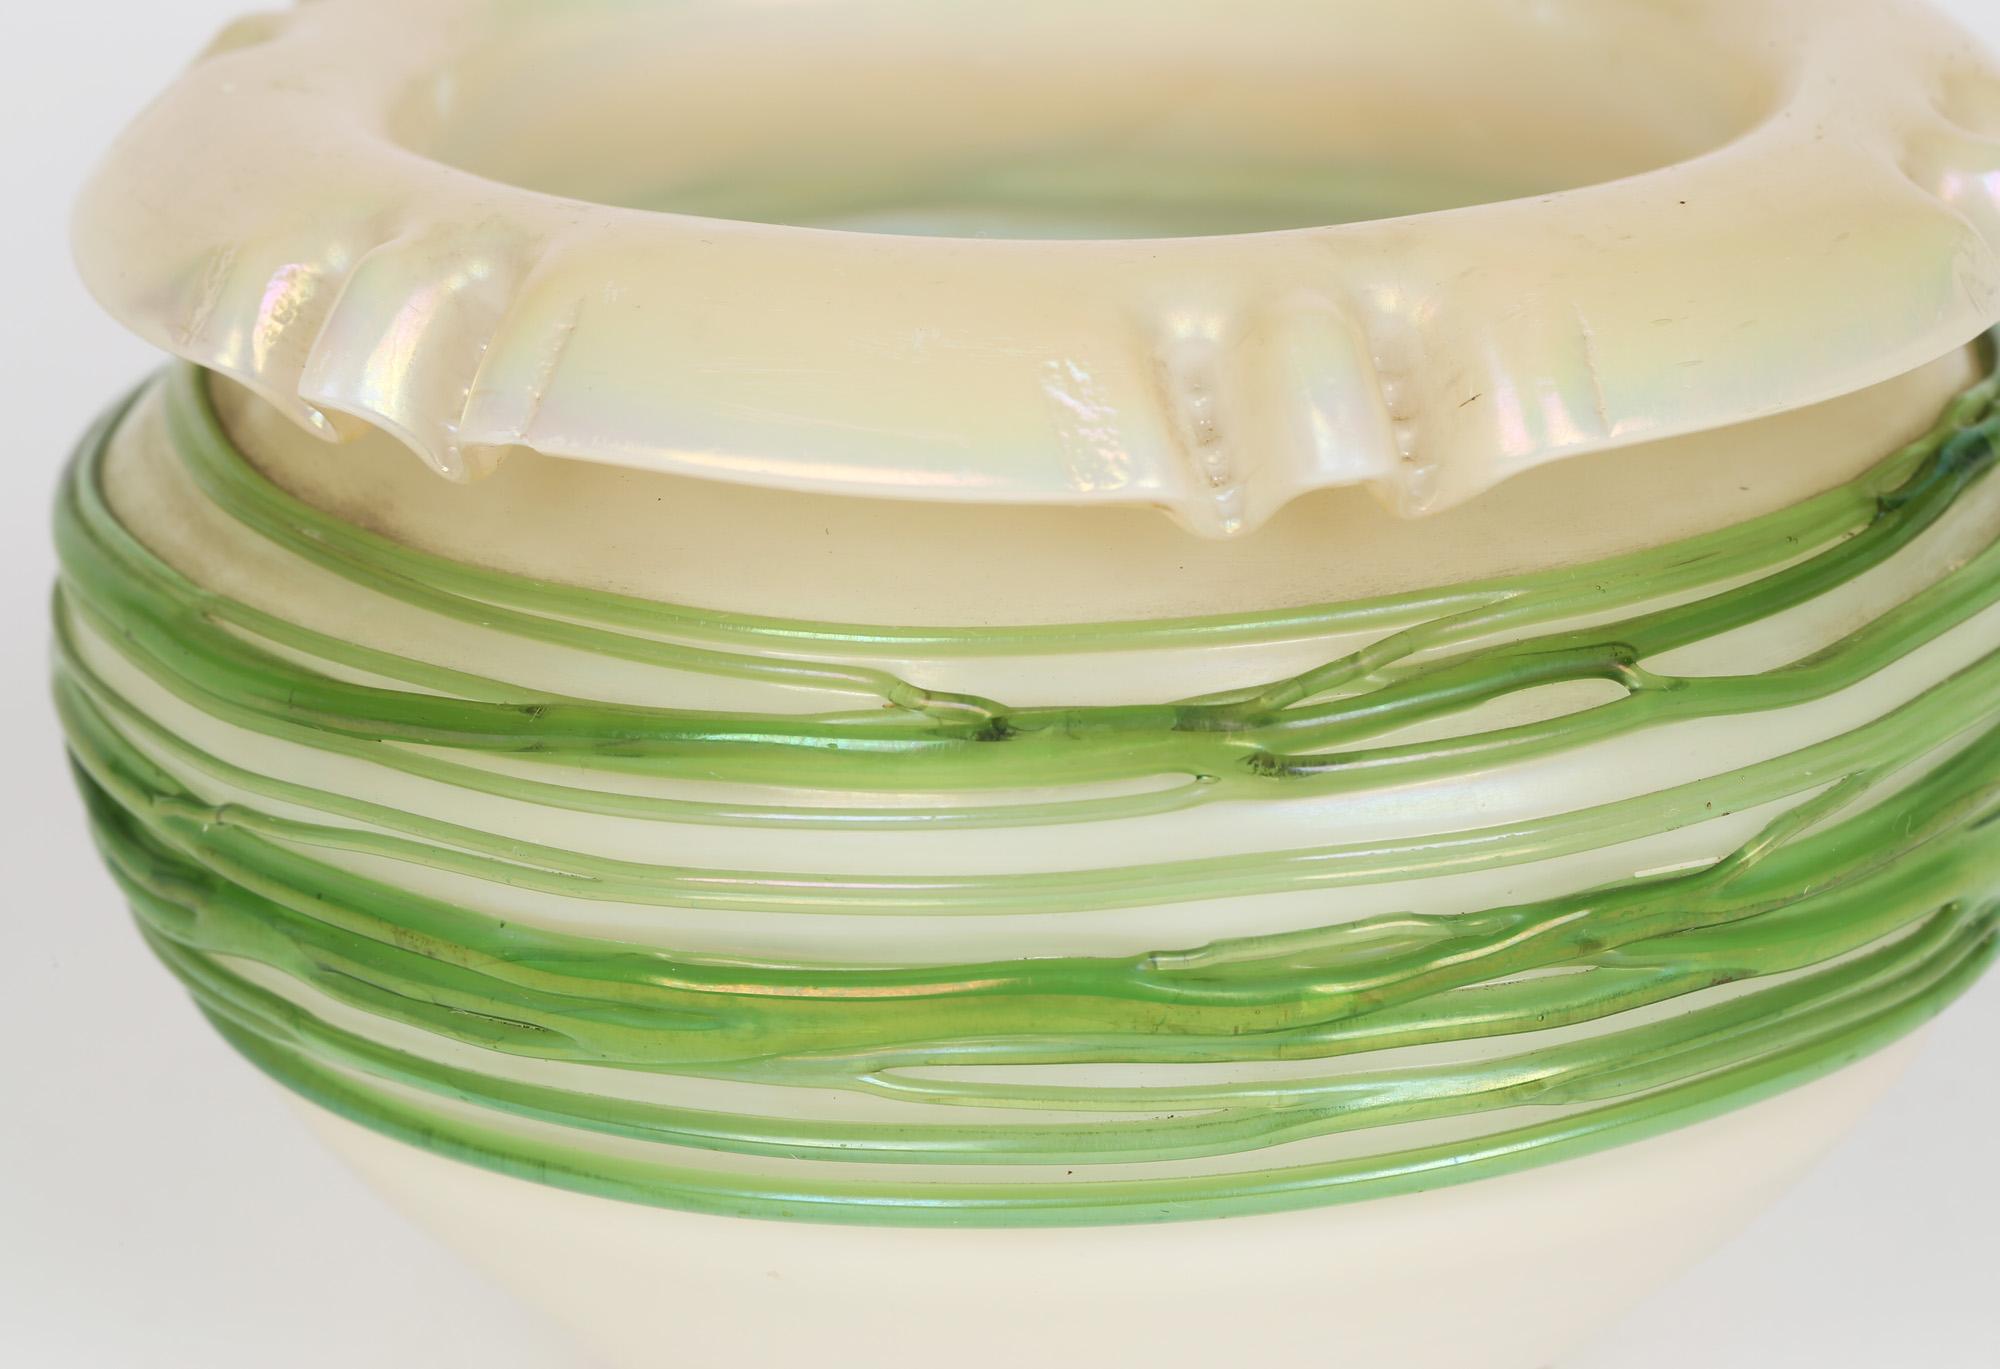 Palme König Green Trailed Thread Iridescent Art Glass Vase For Sale 5